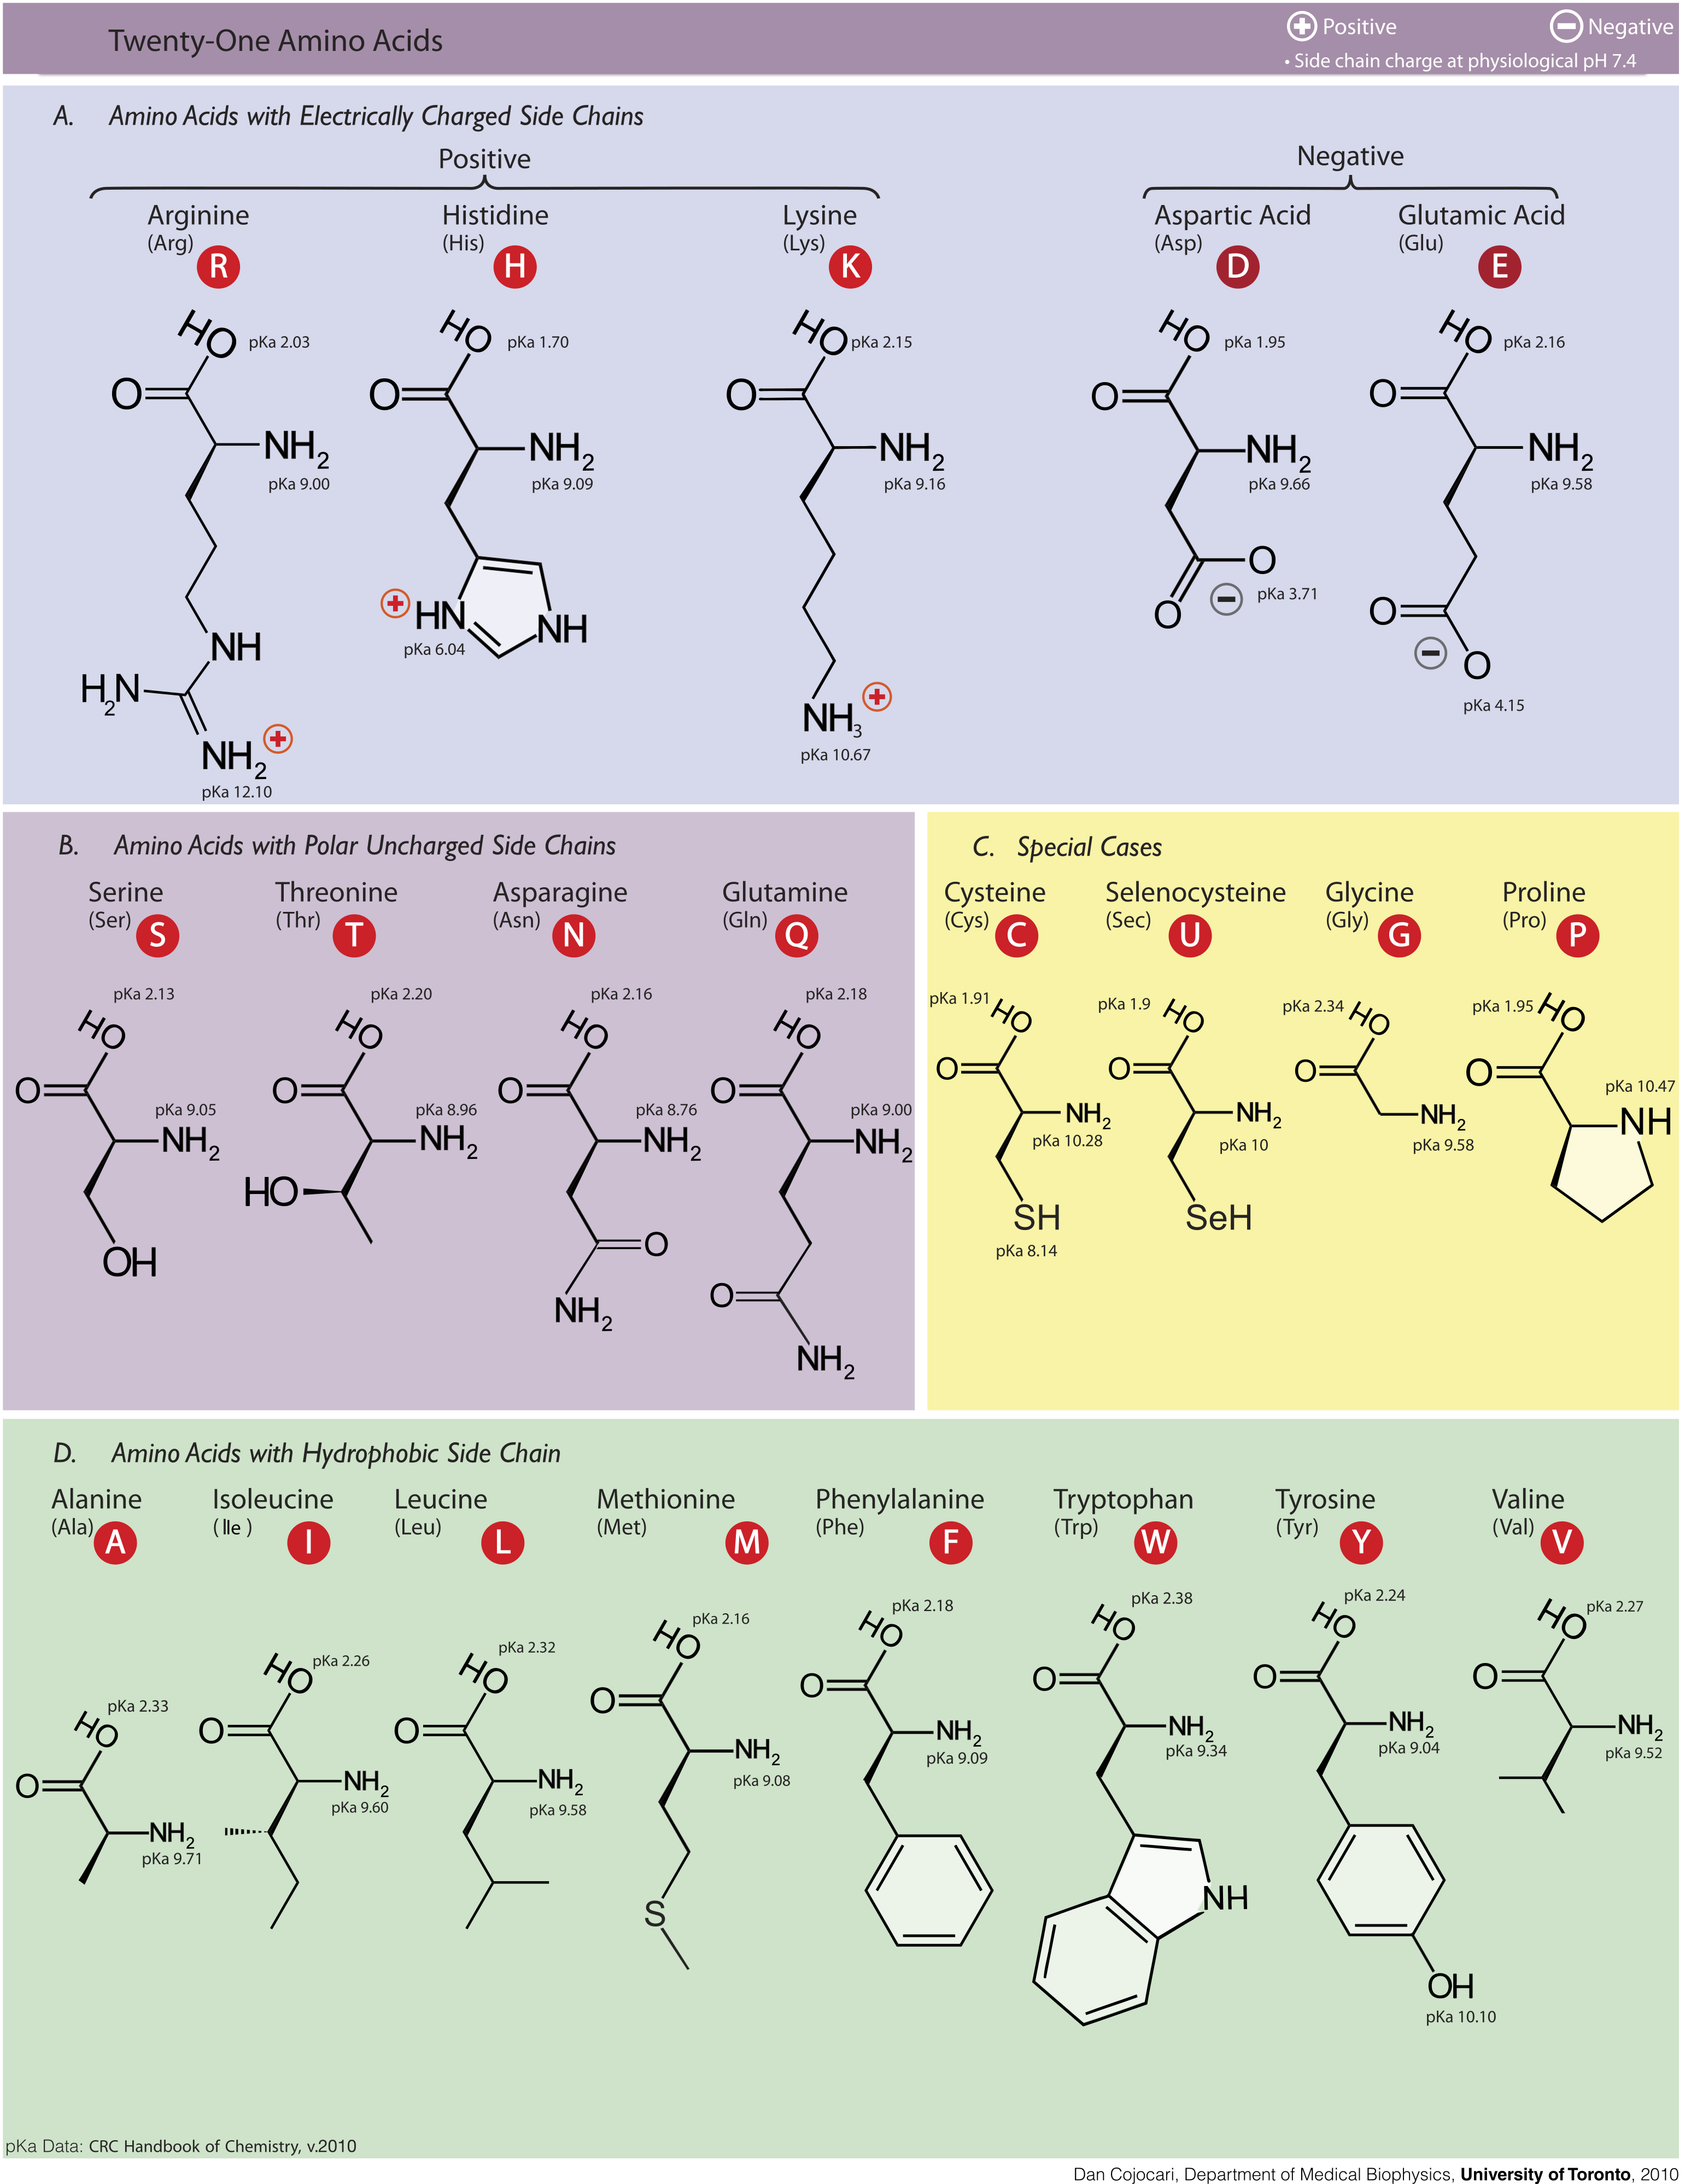 FileAmino acids.png   Wikimedia Commons